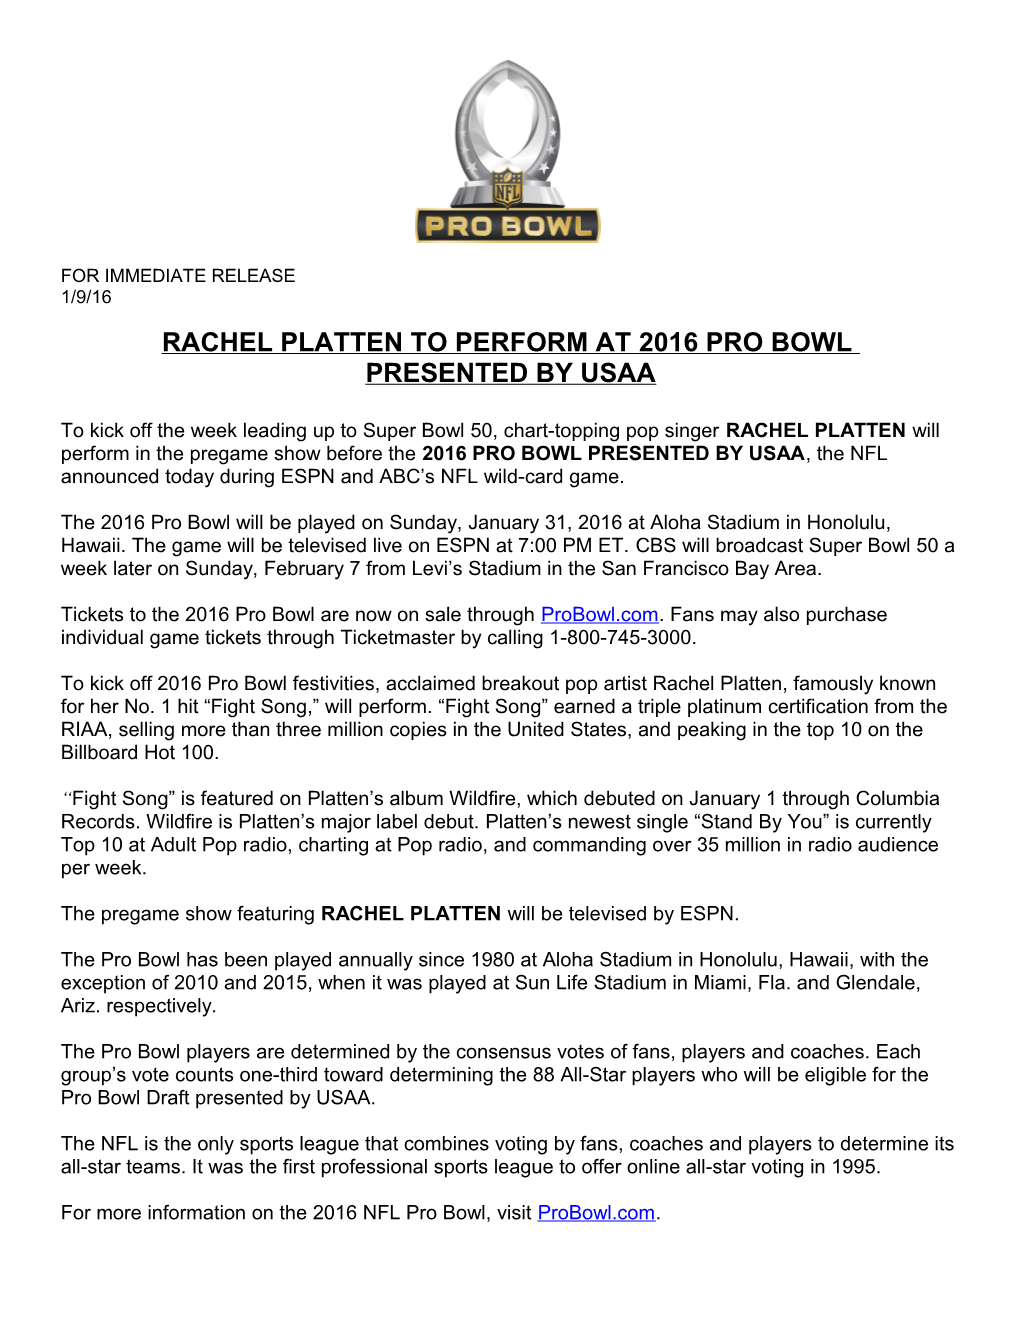 Rachel Platten to Perform at 2016 Pro Bowl